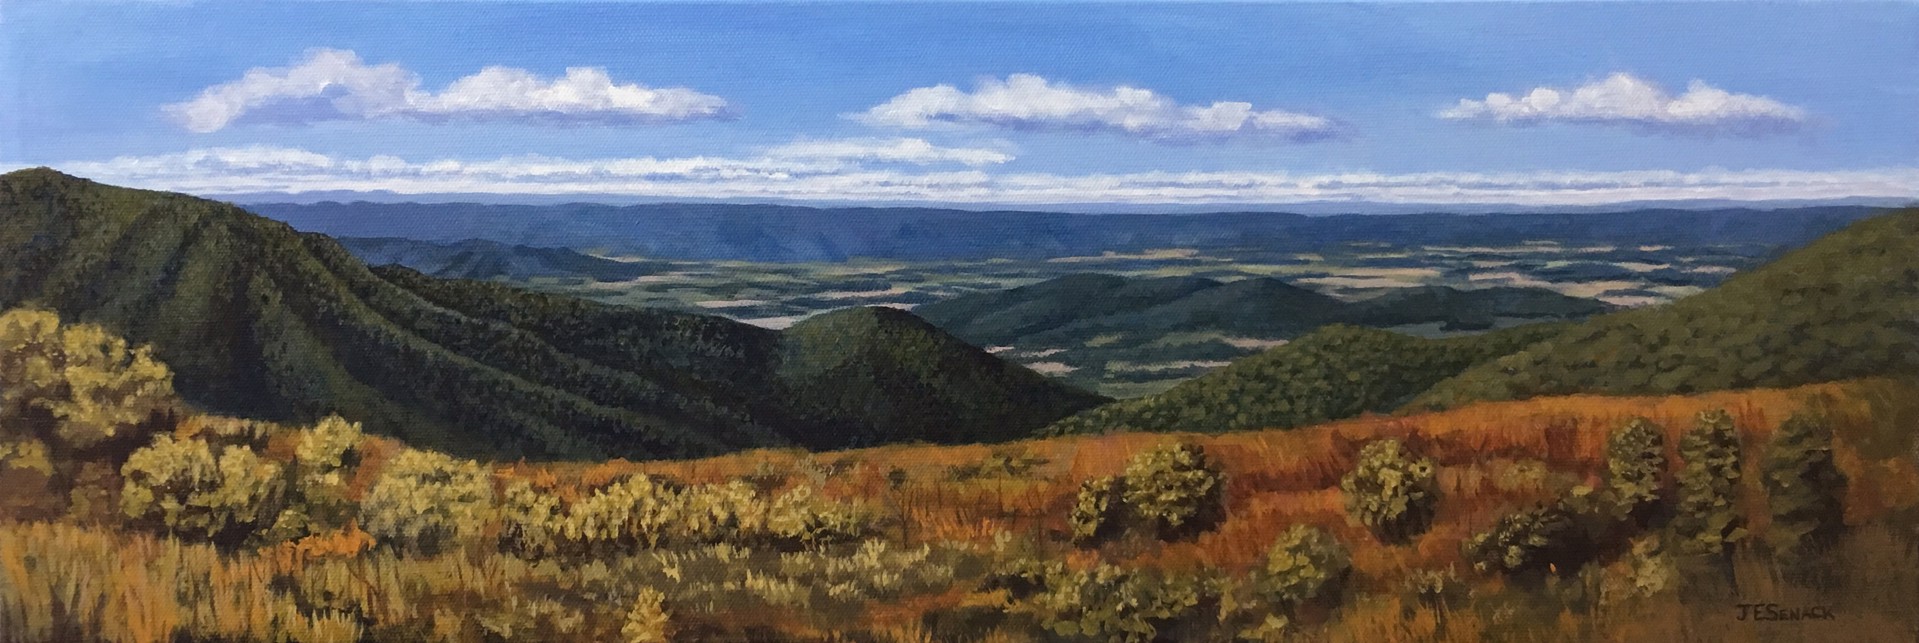 Shenandoah Valley by J.Elaine Senack